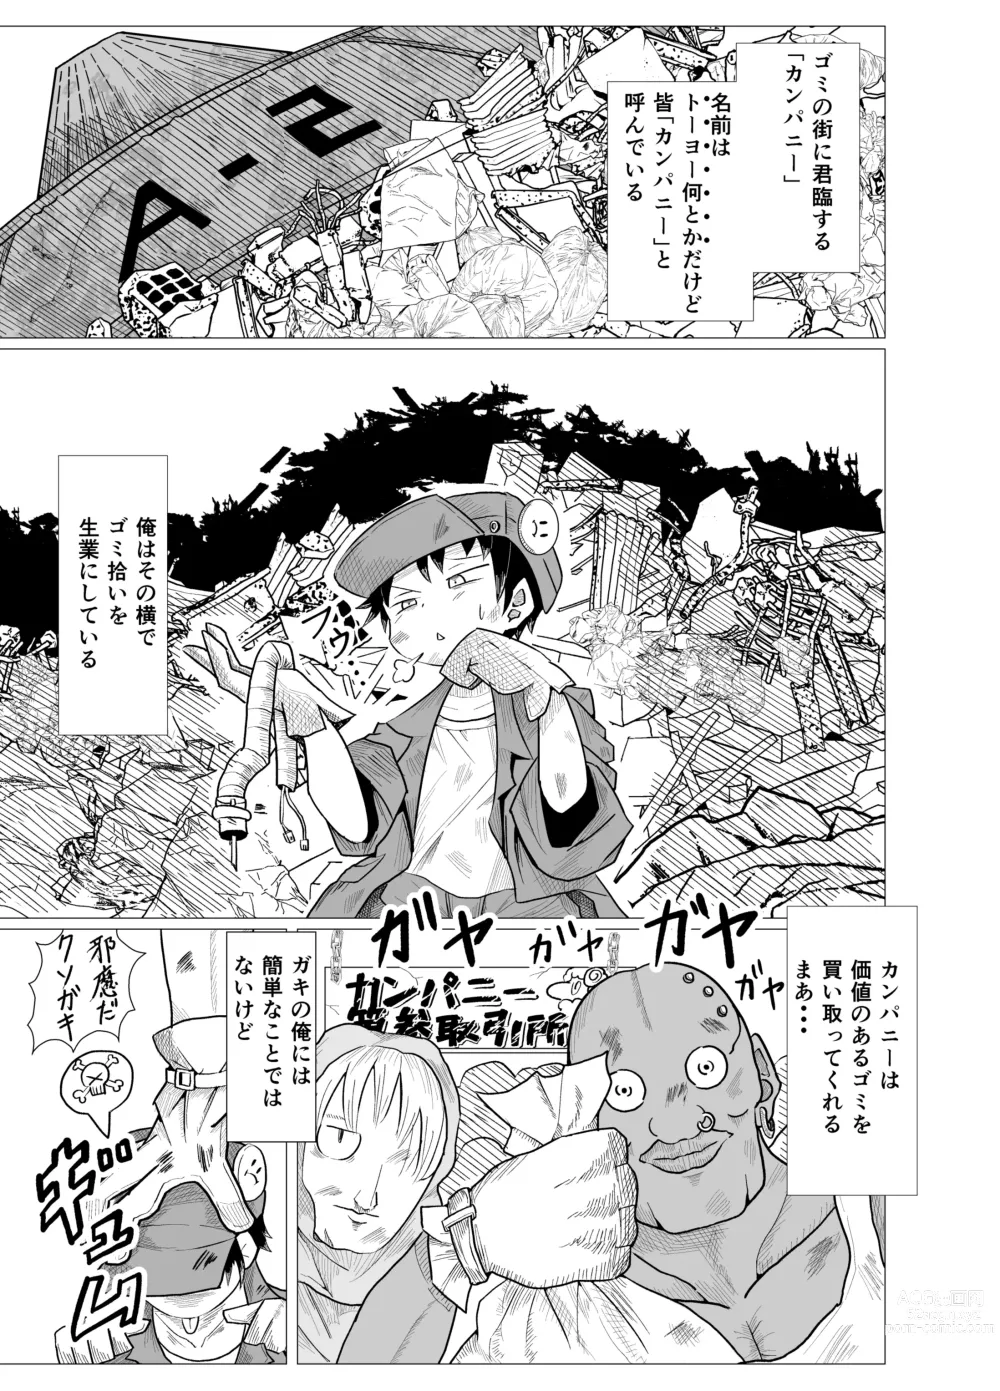 Page 3 of doujinshi kama1JPG